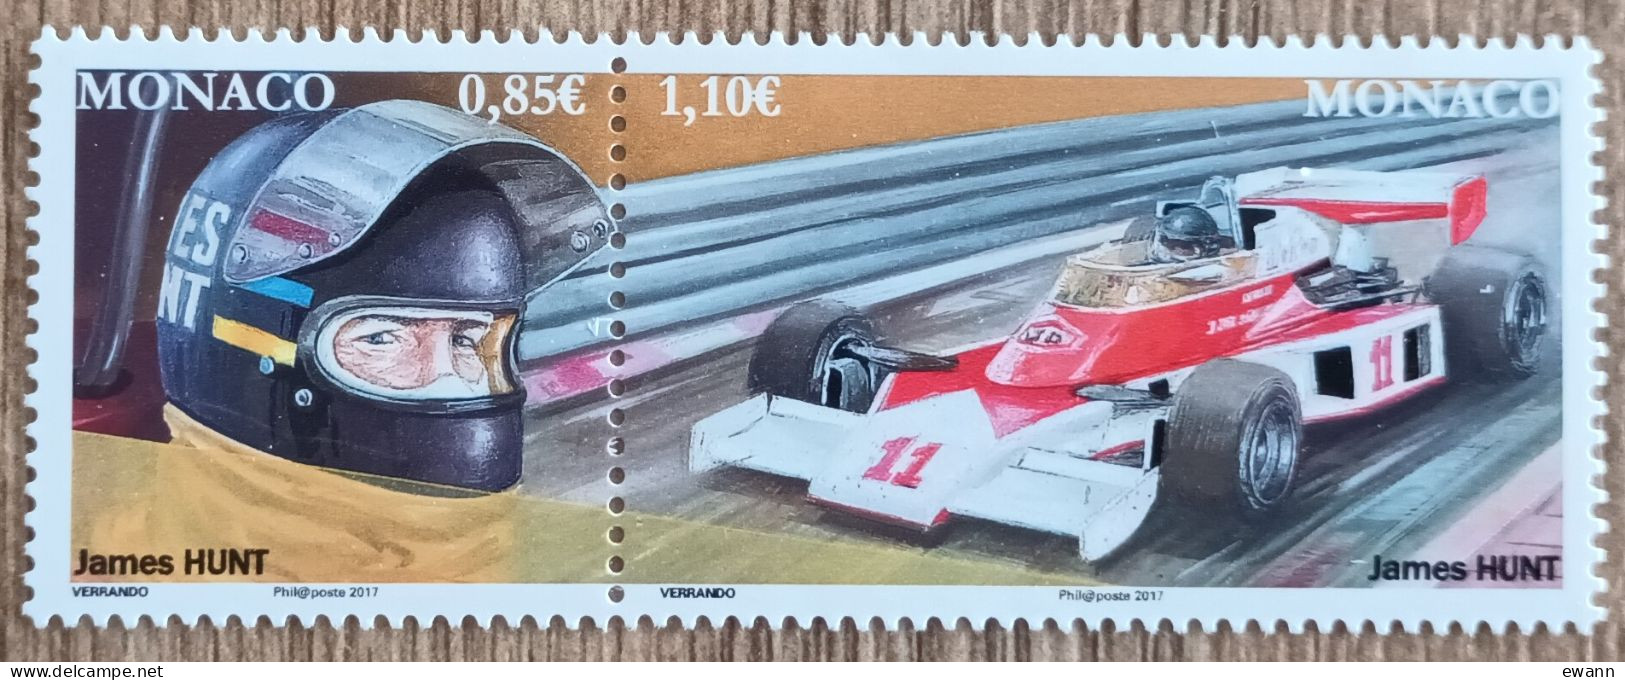 Monaco - YT N°3070, 3071 - Pilotes De Formule 1 / James Hunt - 2017 - Neuf - Unused Stamps